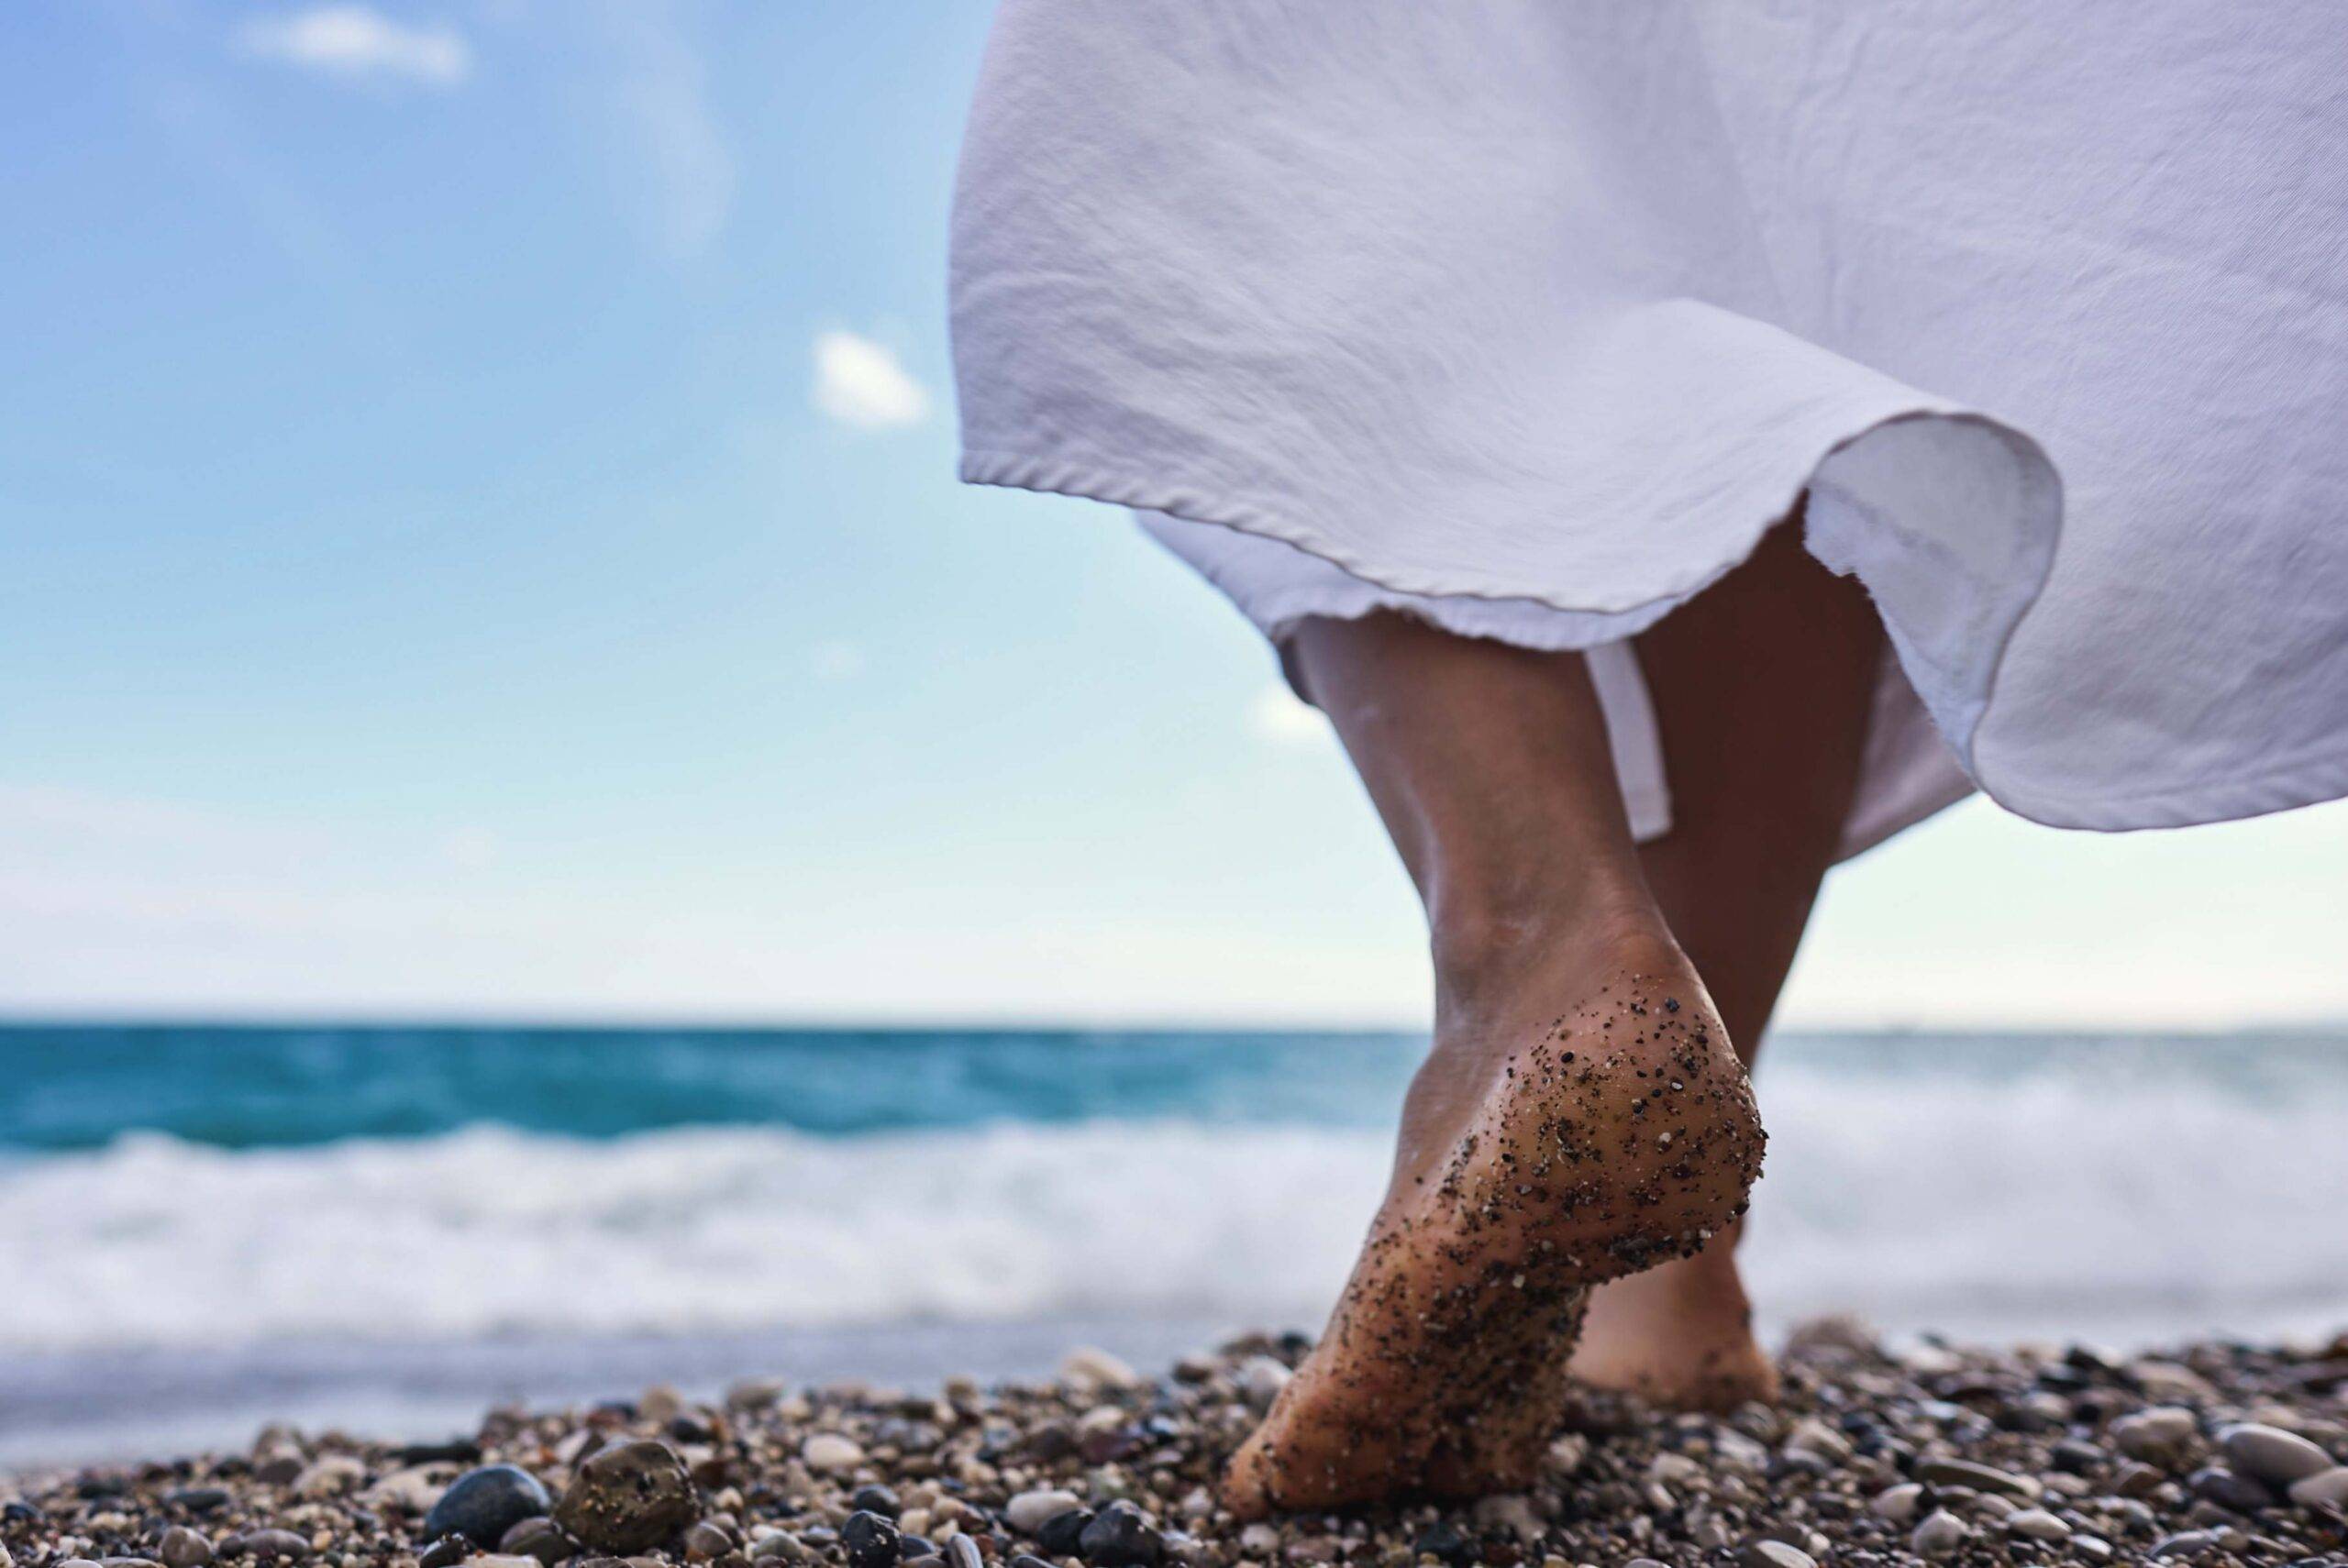 Barefoot woman walking on a rocky beach